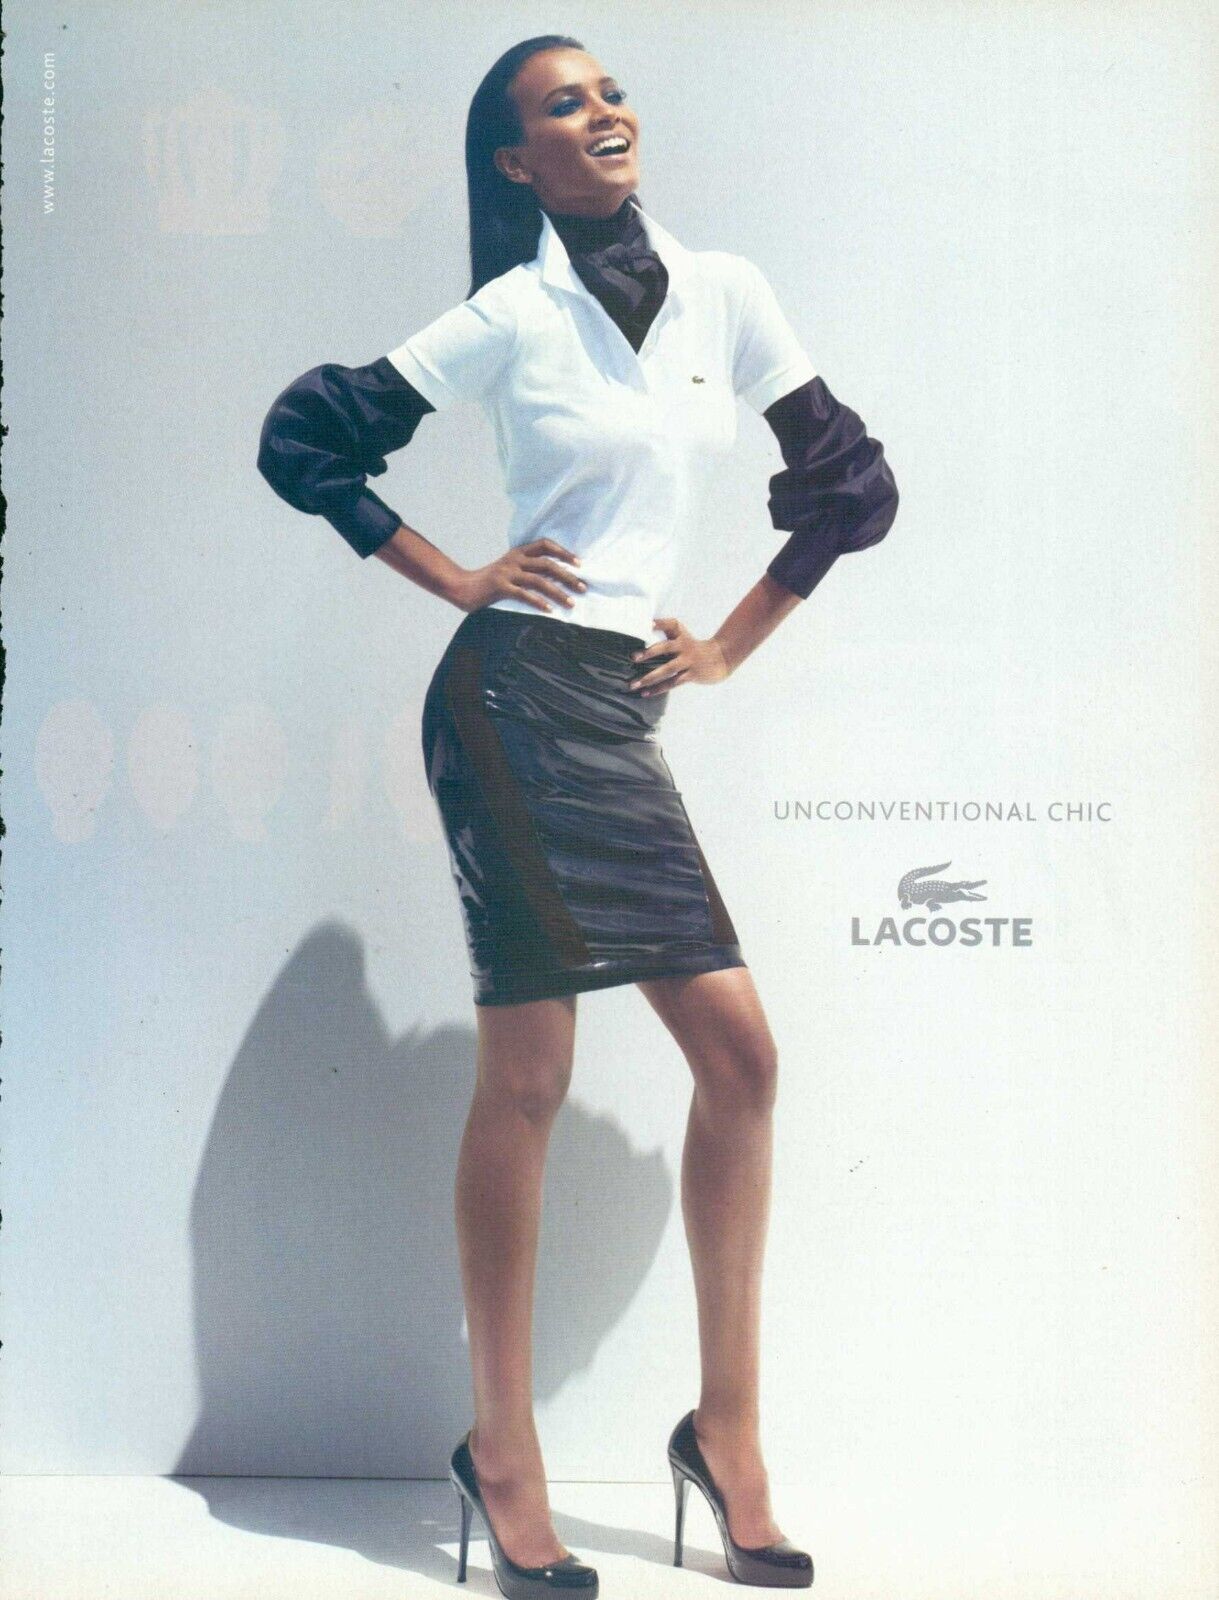 LACOSTE Footwear Magazine Print Ad Advert long legs high heels shoes 2011